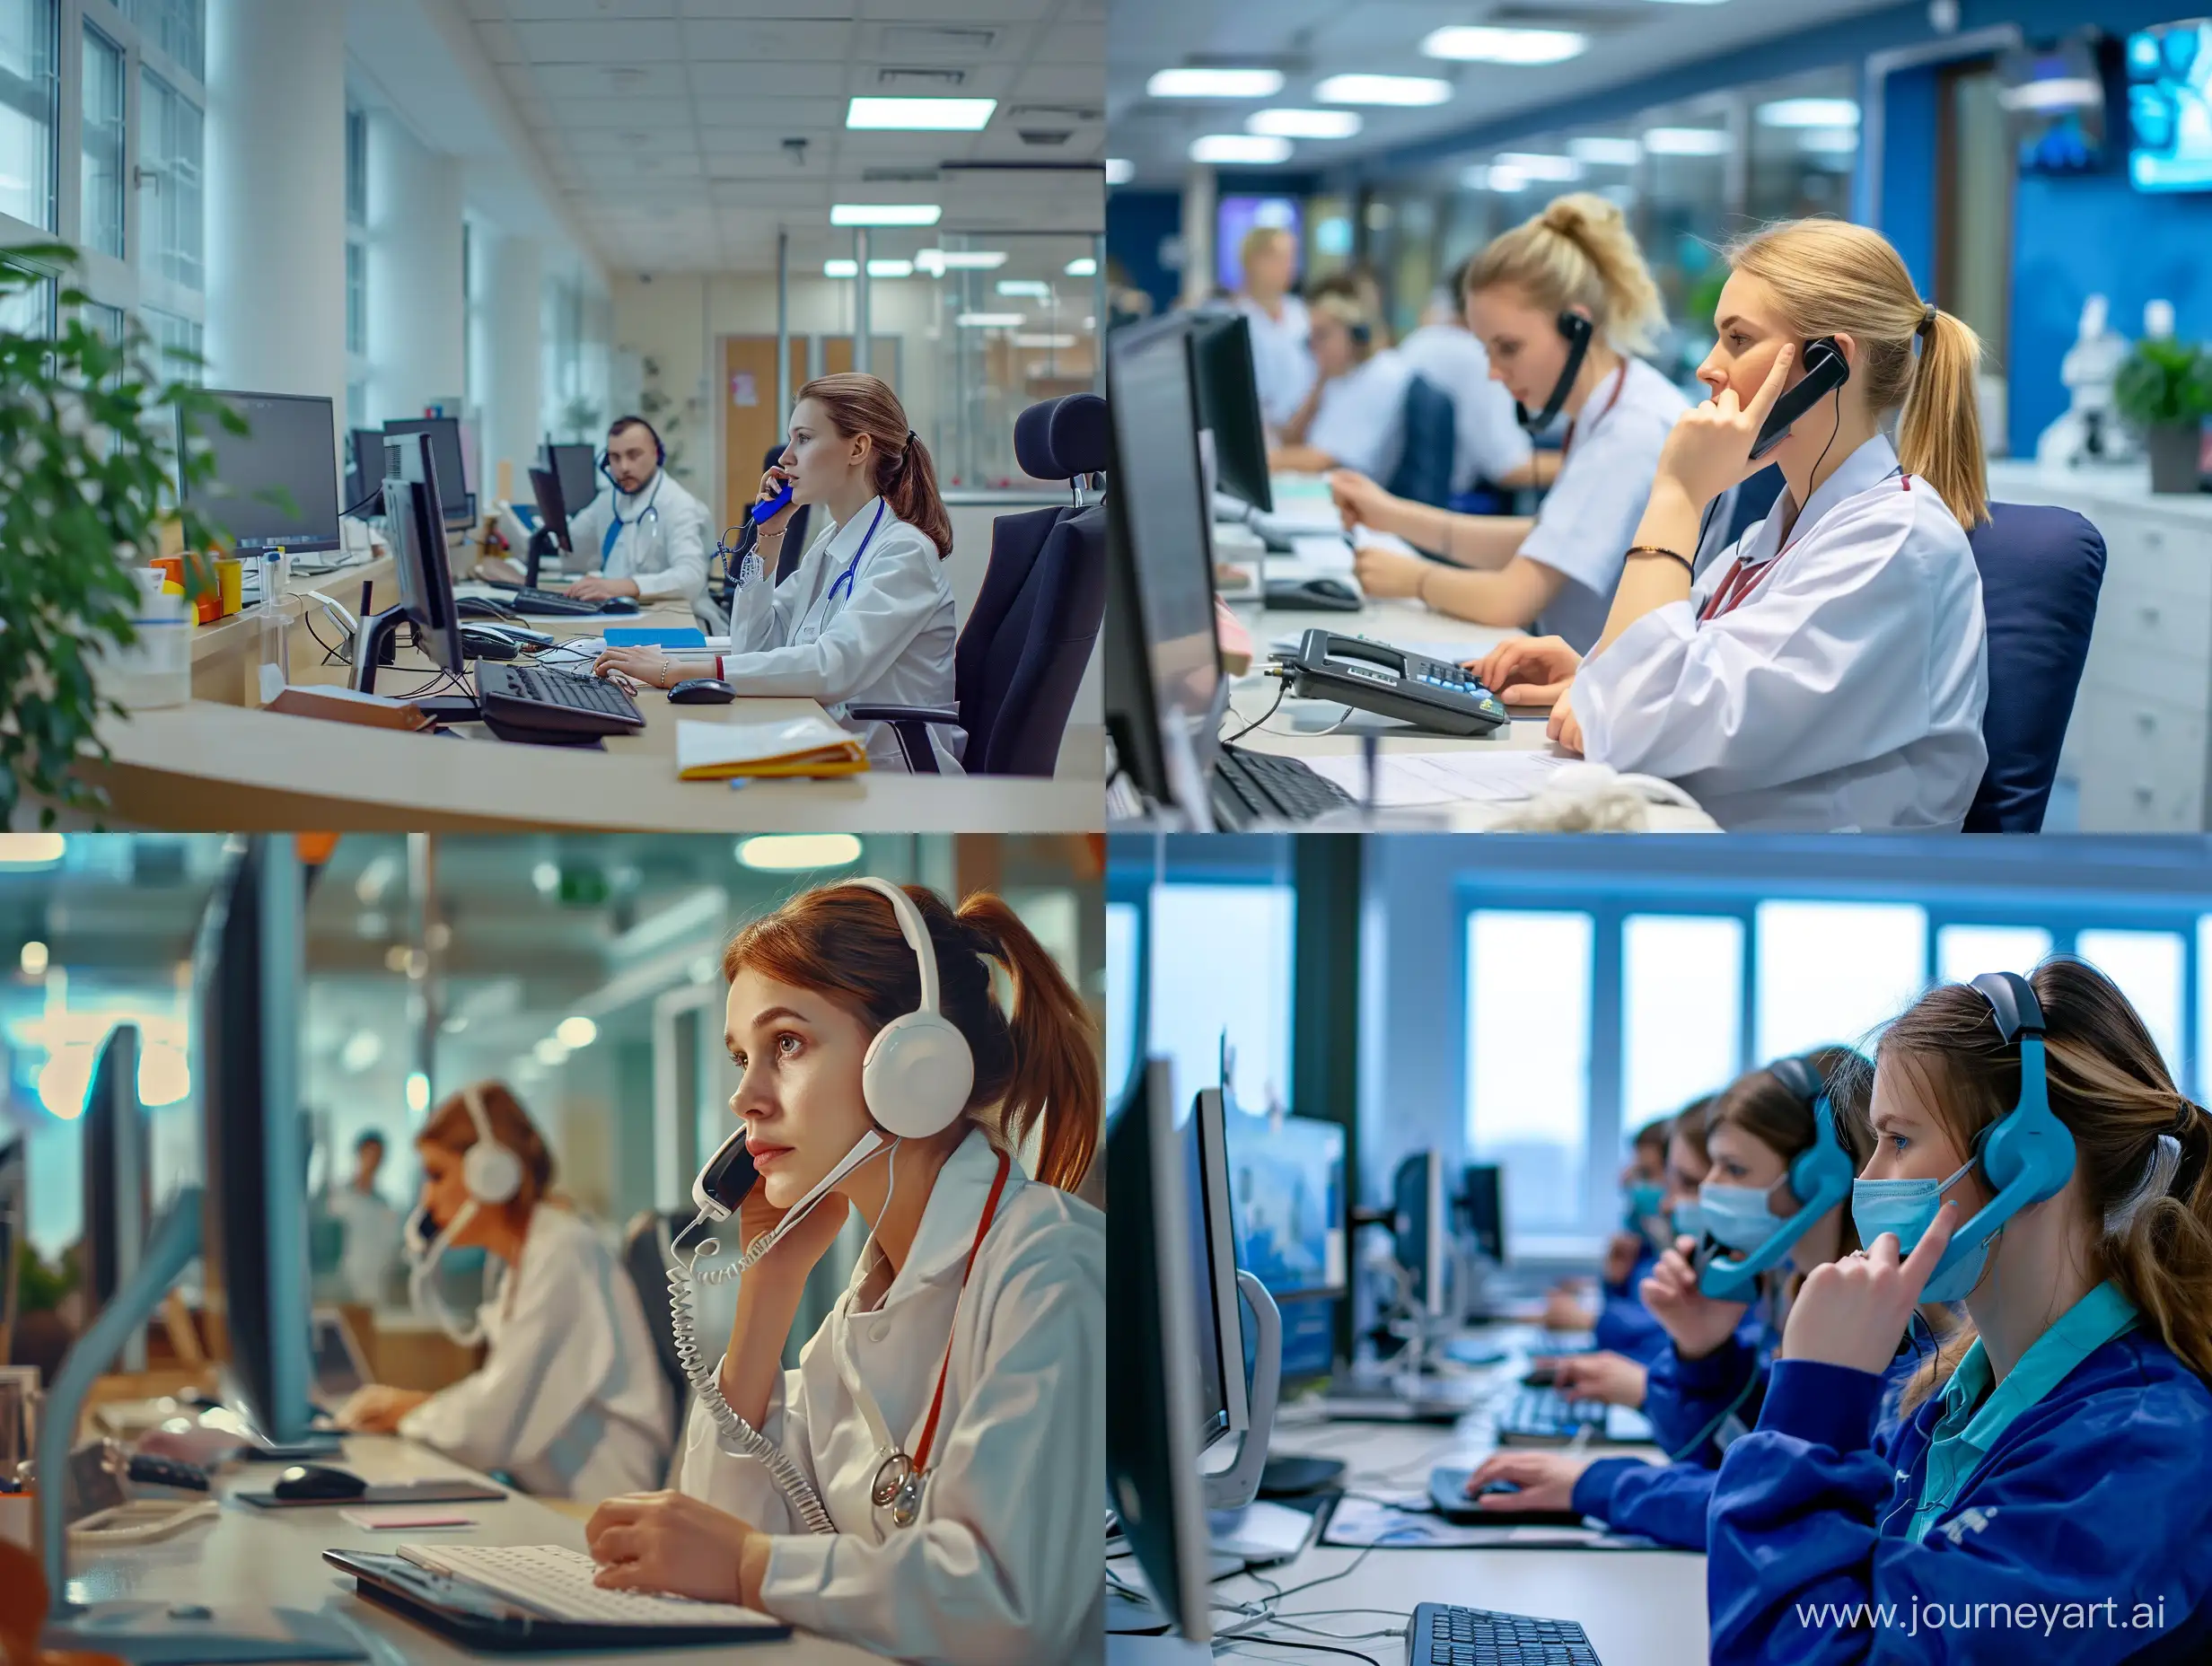 RussianSpeaking-Medical-Helpline-Operators-Assisting-Patients-in-Office